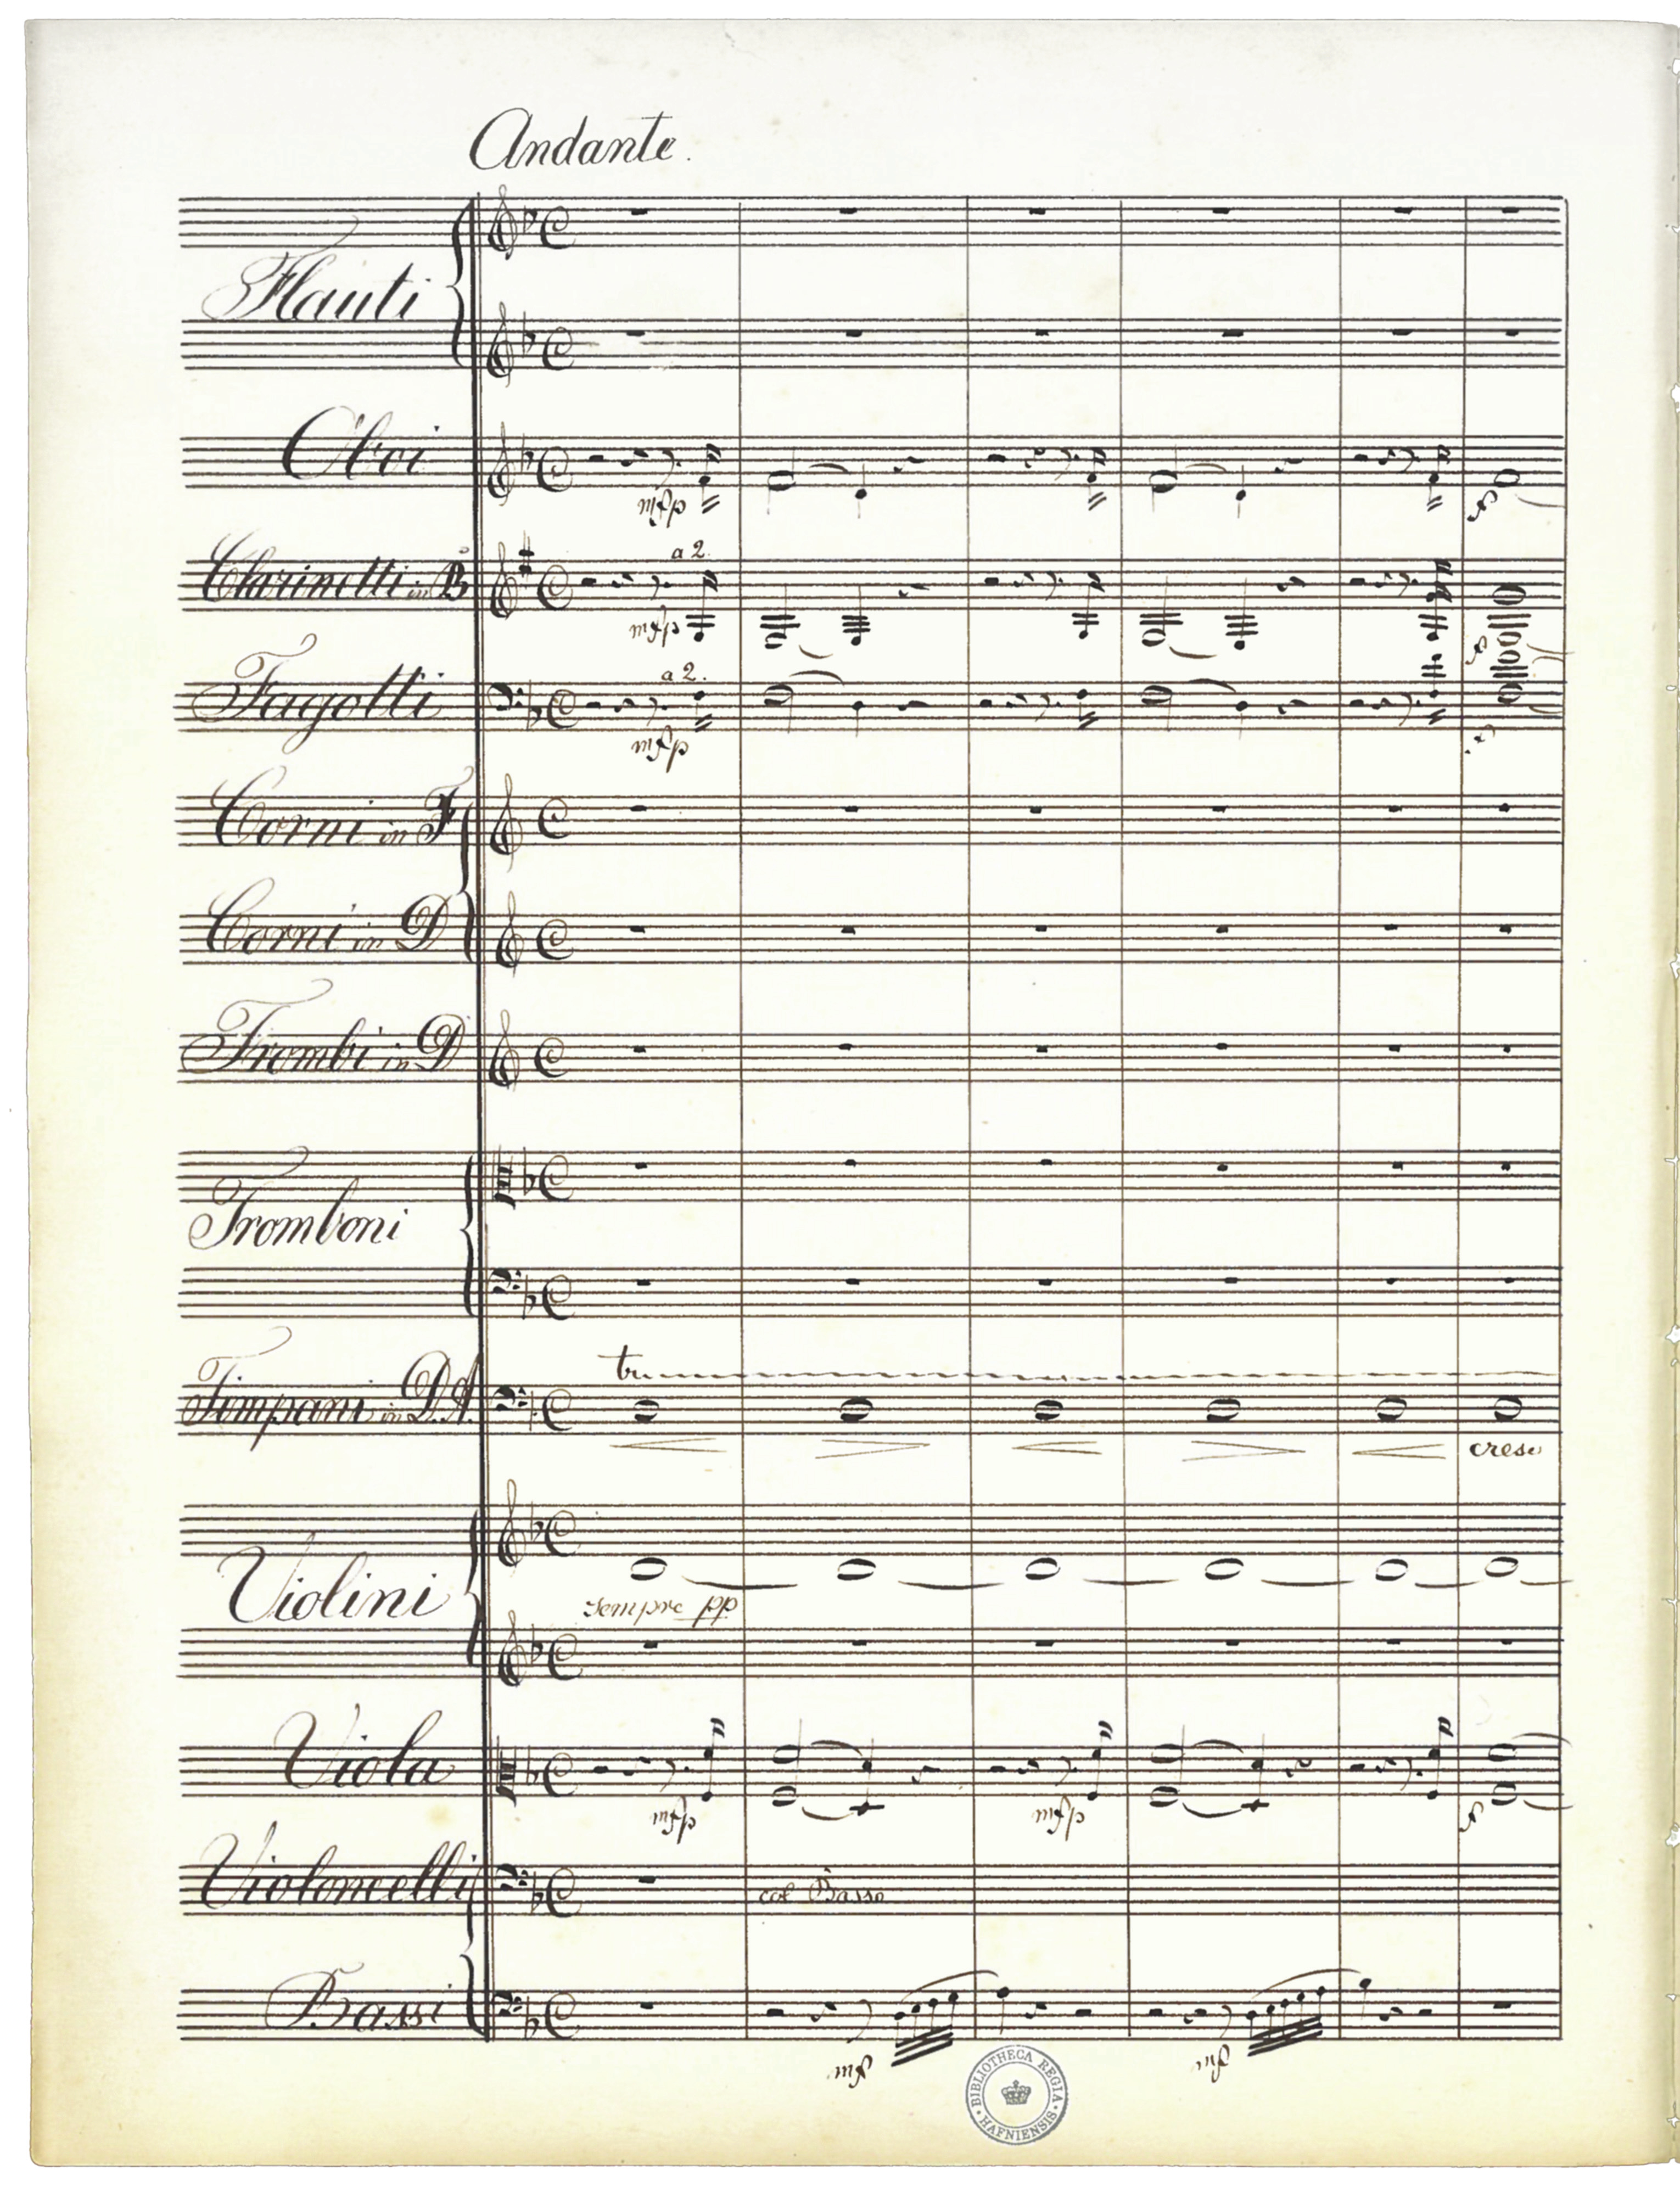 Musikoreningens askrit a artituret (kilde C), s. 2.